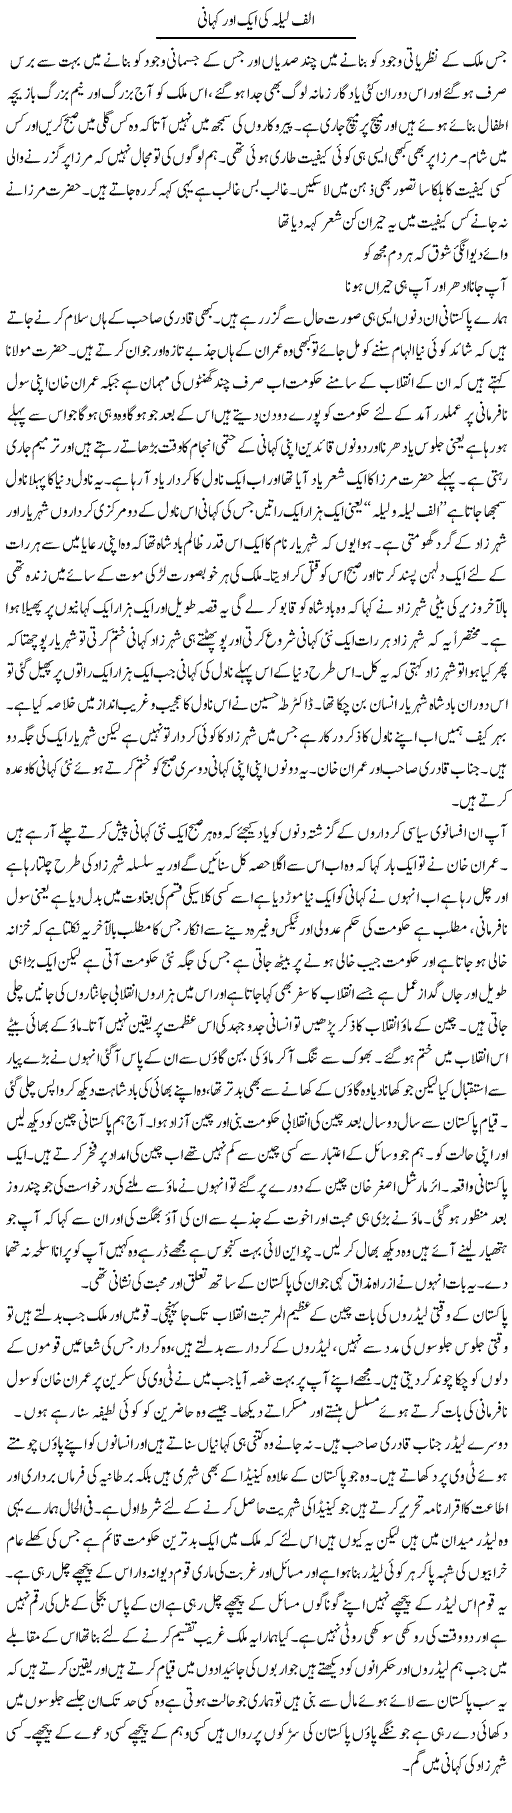 Alif Laila Ki Aik Our Kahani | Abdul Qadir Hassan | Daily Urdu Columns